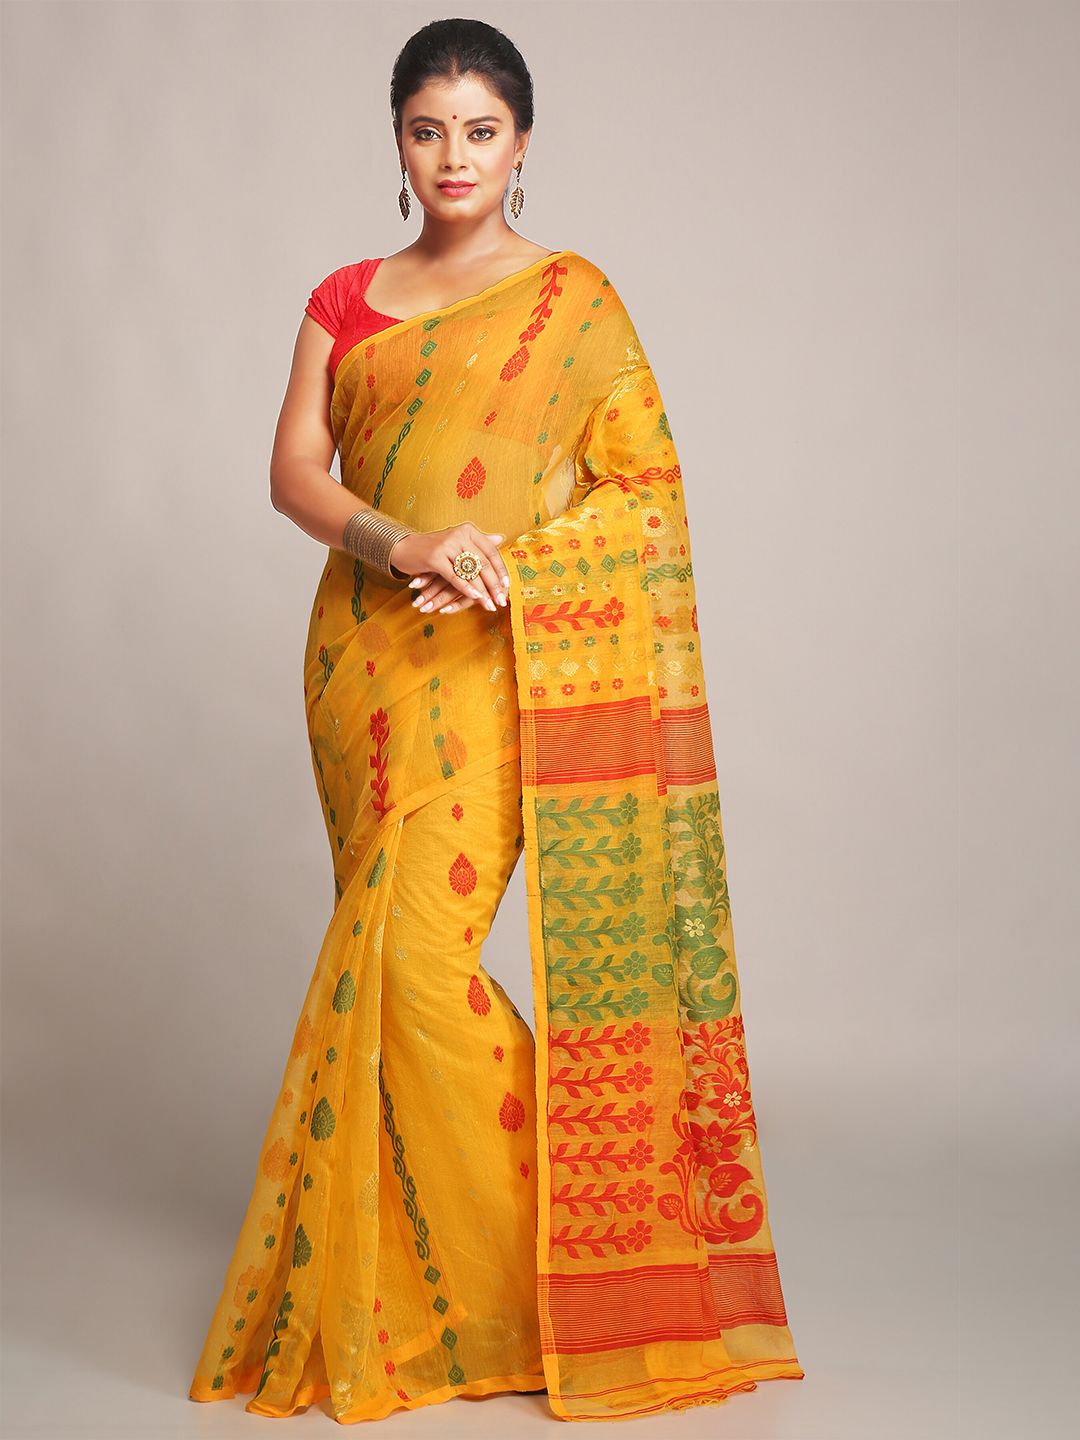 BENGAL HANDLOOM Yellow & Red Woven Design Cotton Silk Jamdani Saree Price in India